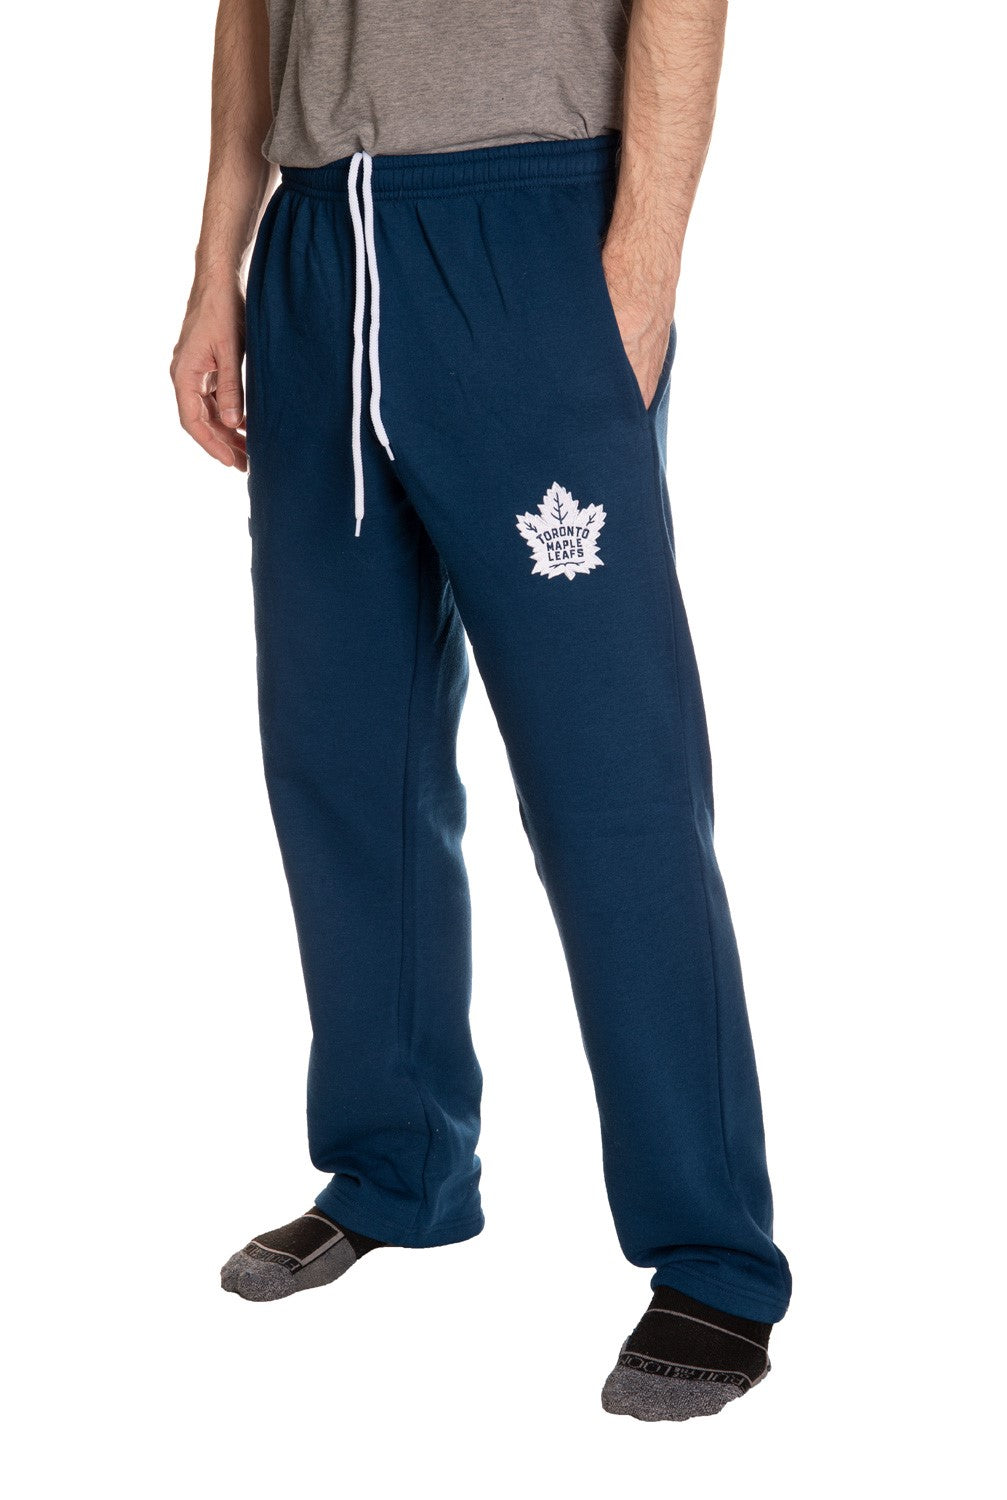 Toronto Maple Leafs Premium Sweatpants Side View